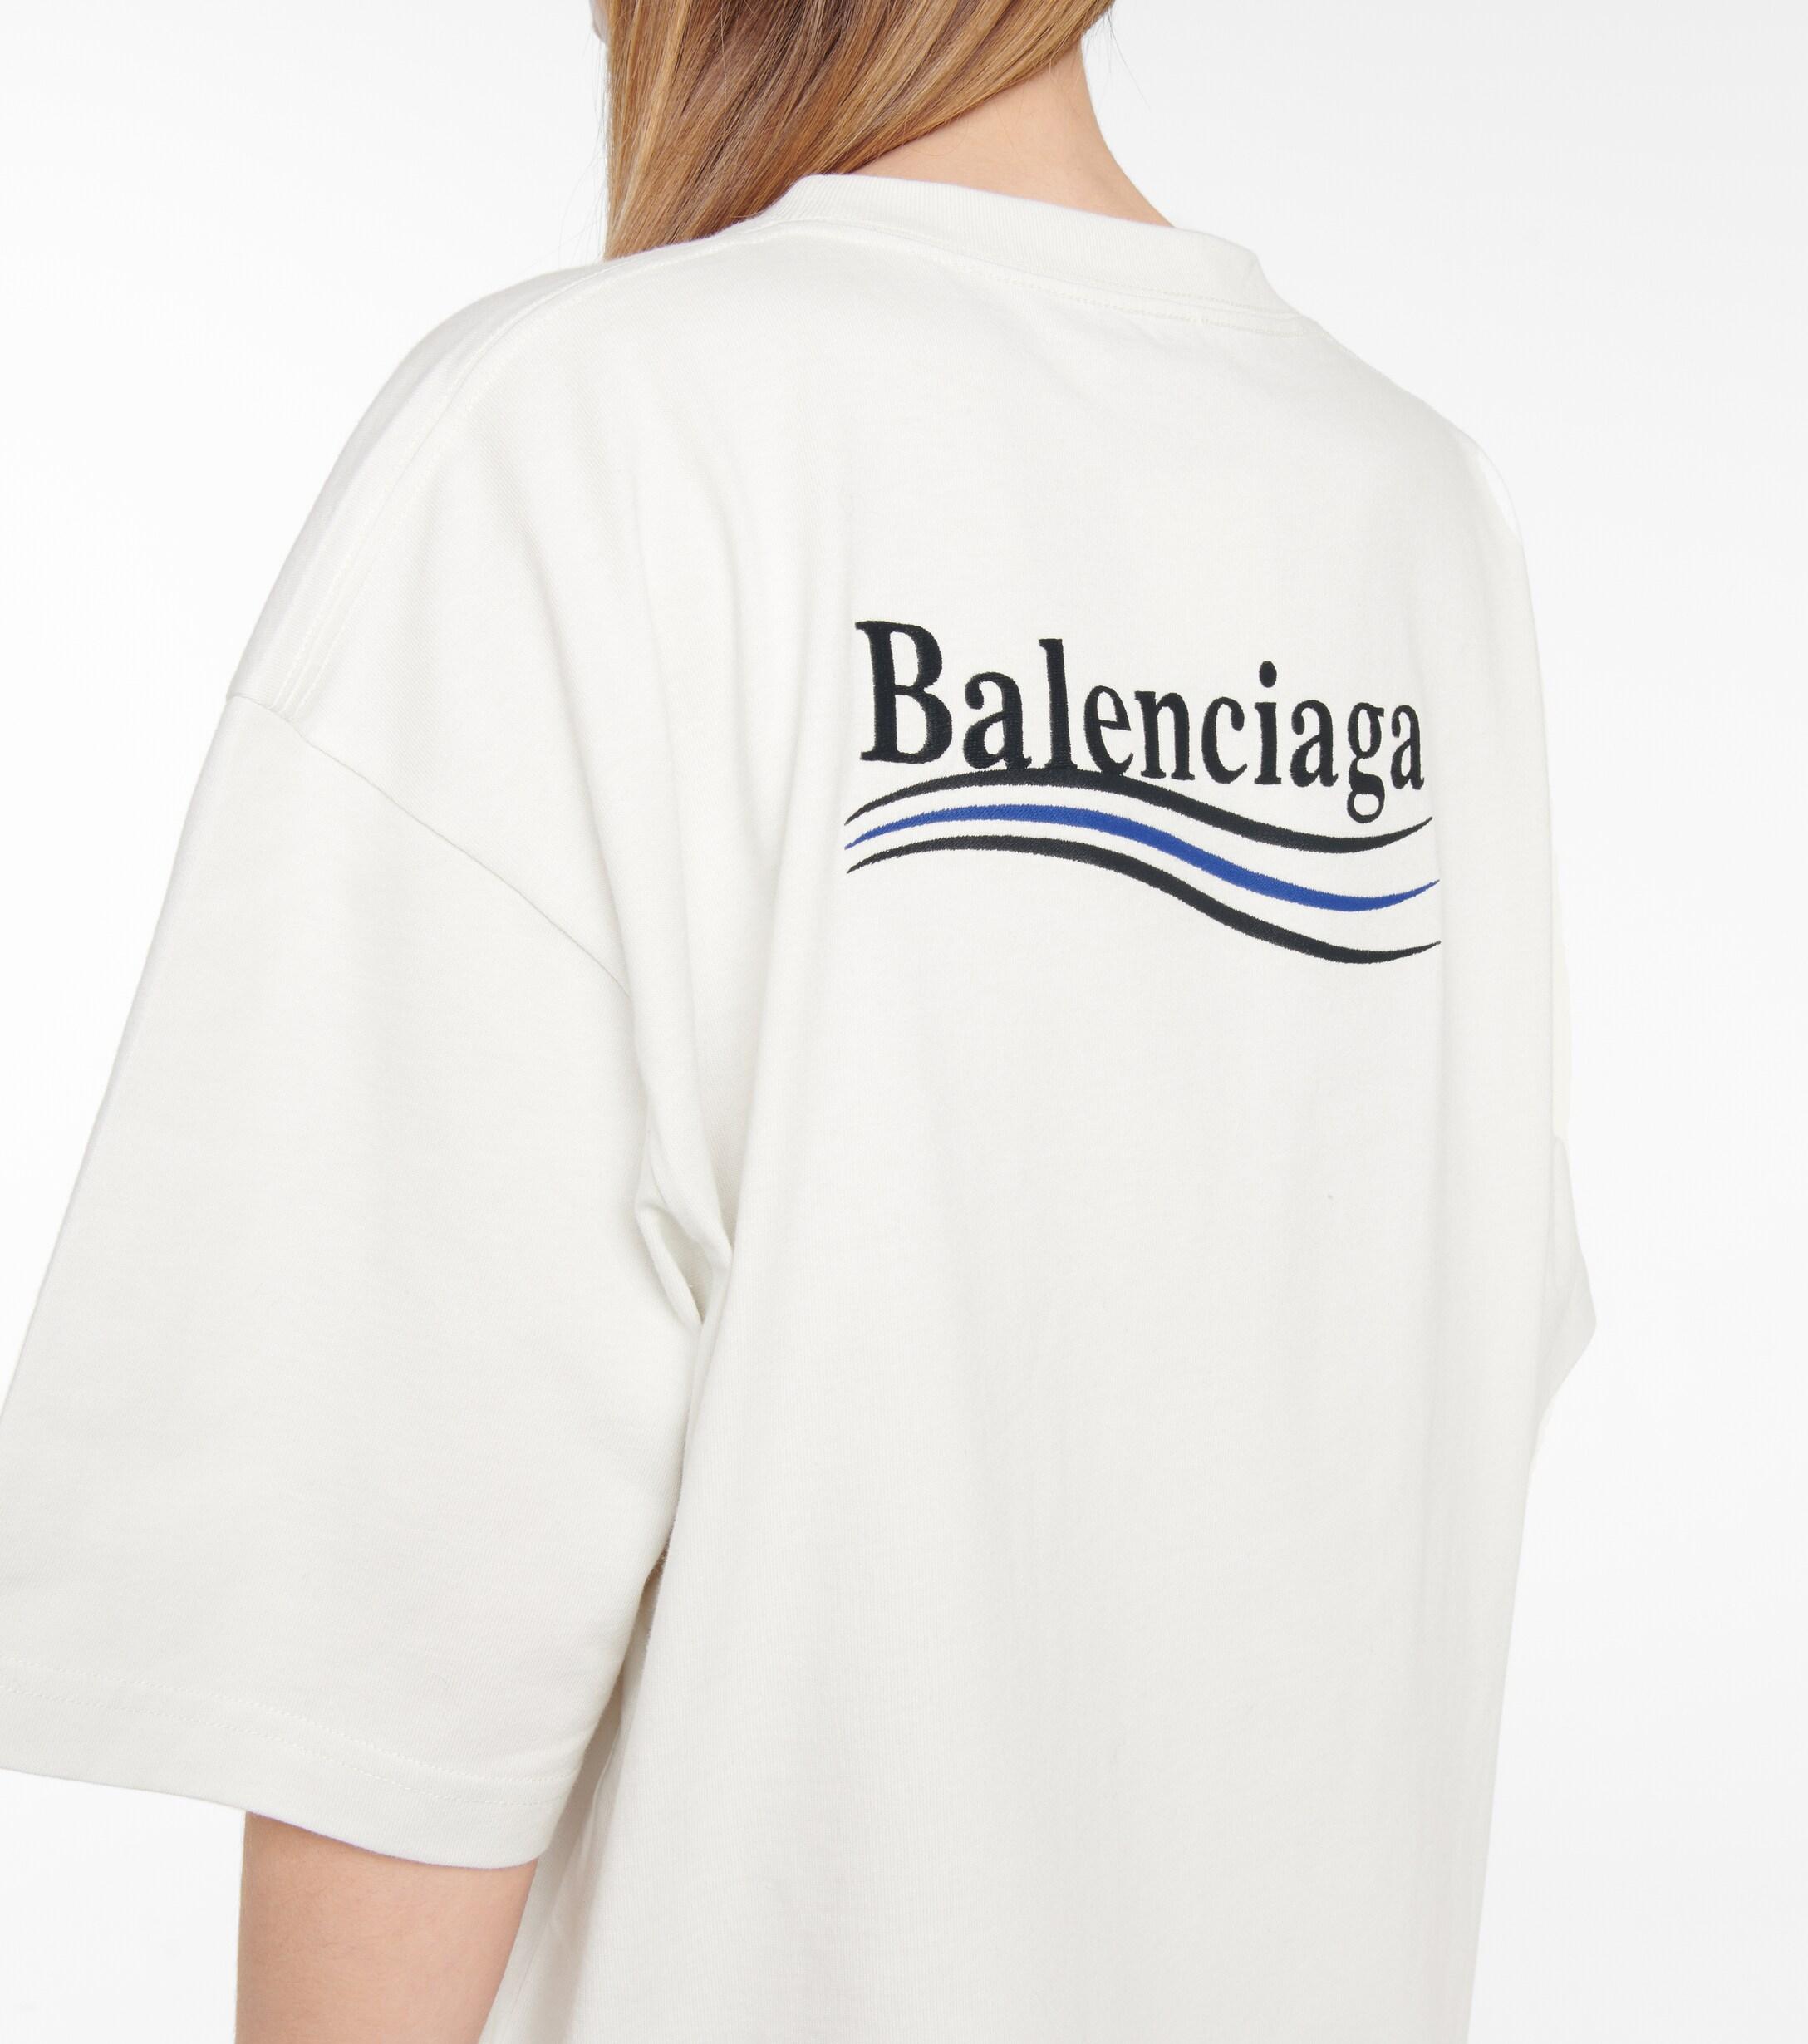 Balenciaga Logo Cotton T-shirt in Dirty White/Black (White) - Save 53% |  Lyst